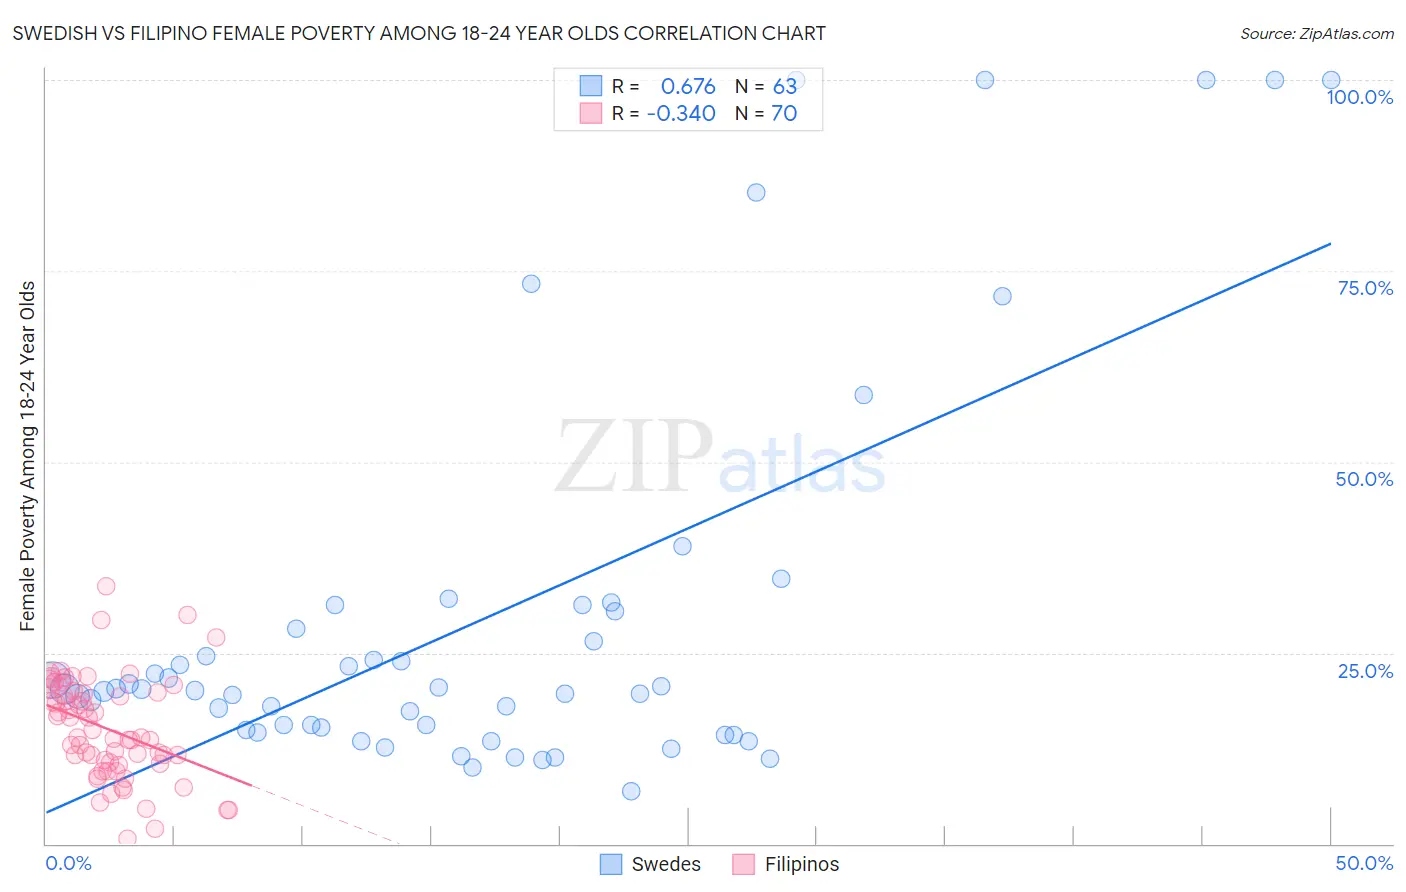 Swedish vs Filipino Female Poverty Among 18-24 Year Olds